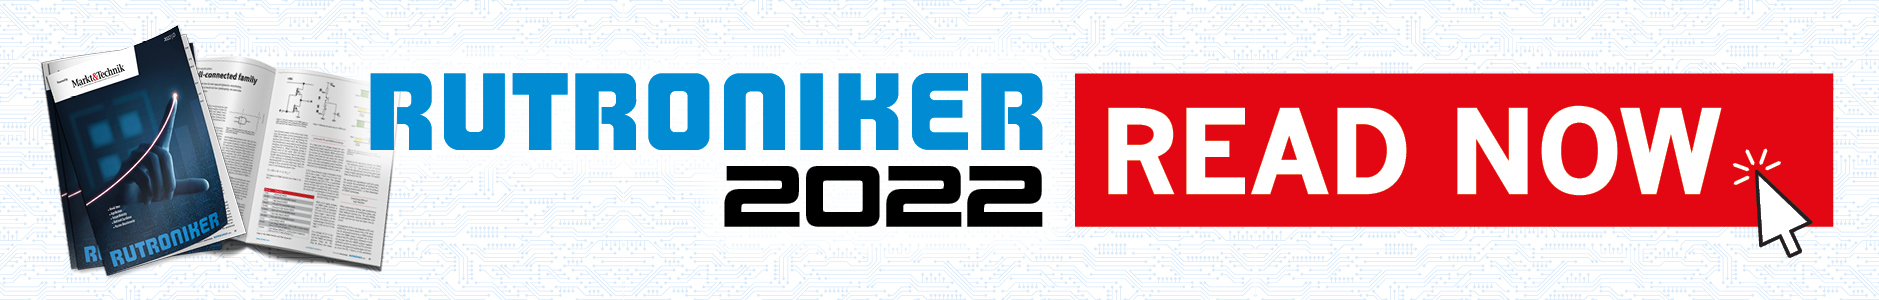 RUTRONIKER 2022 - Read now